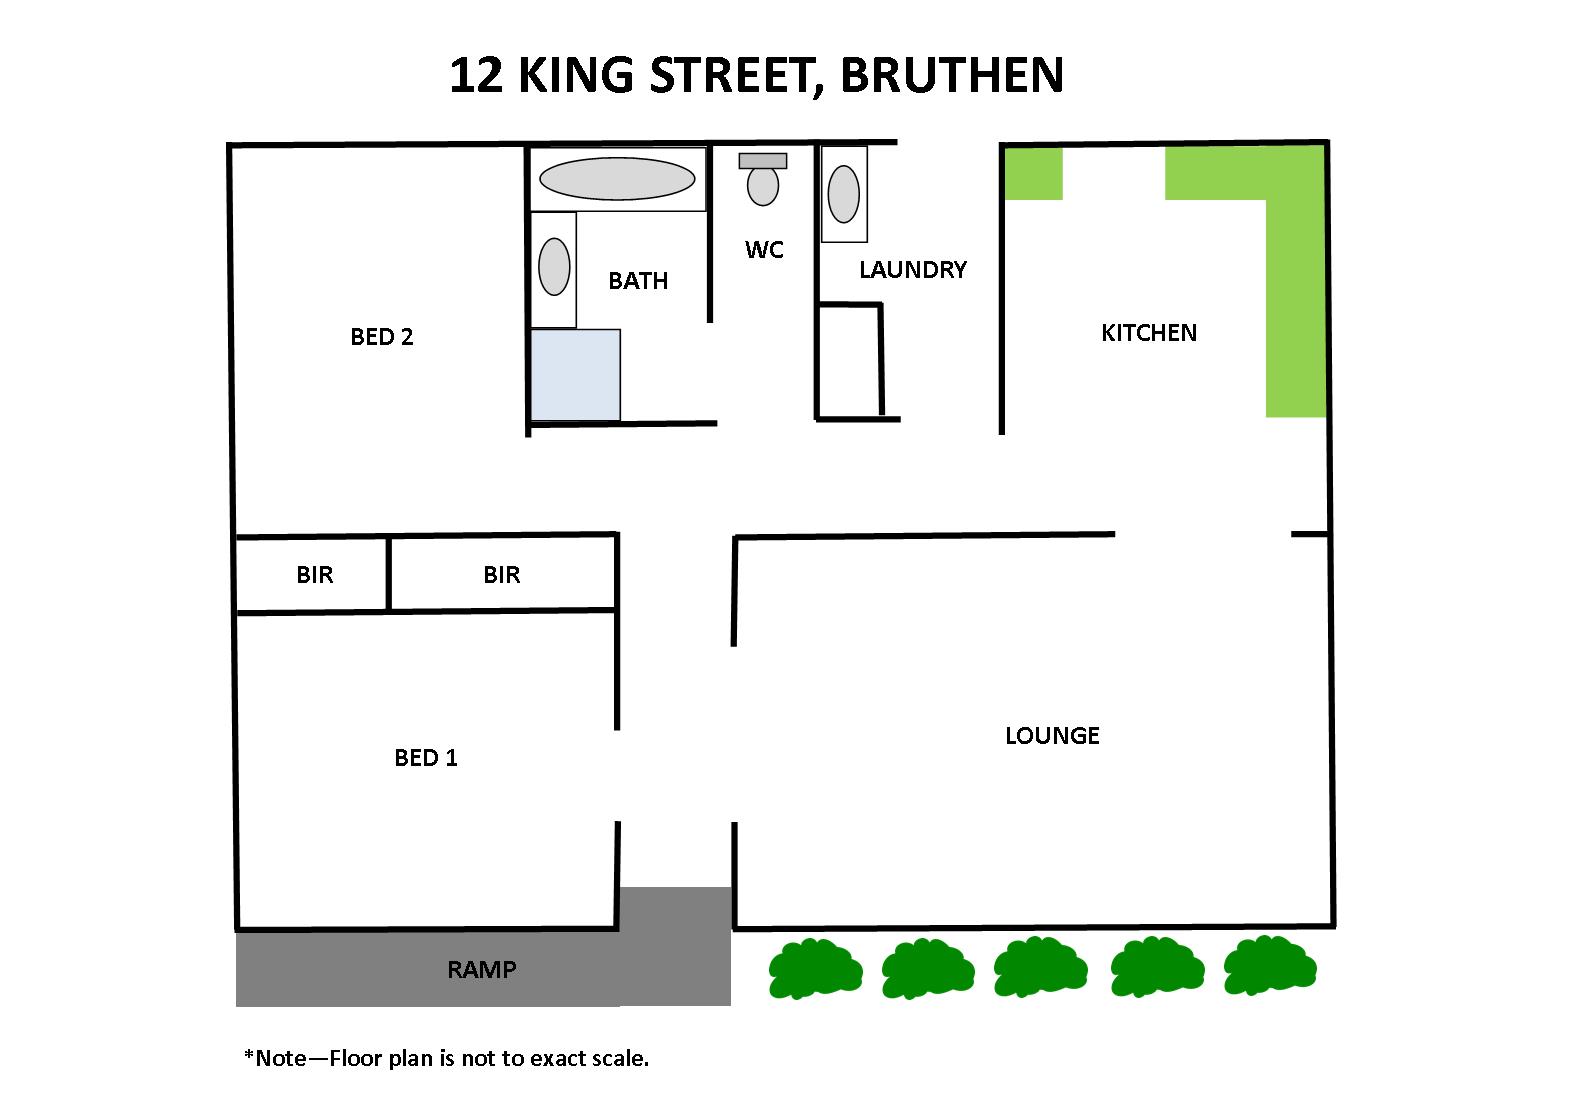 12 King Street, Bruthen